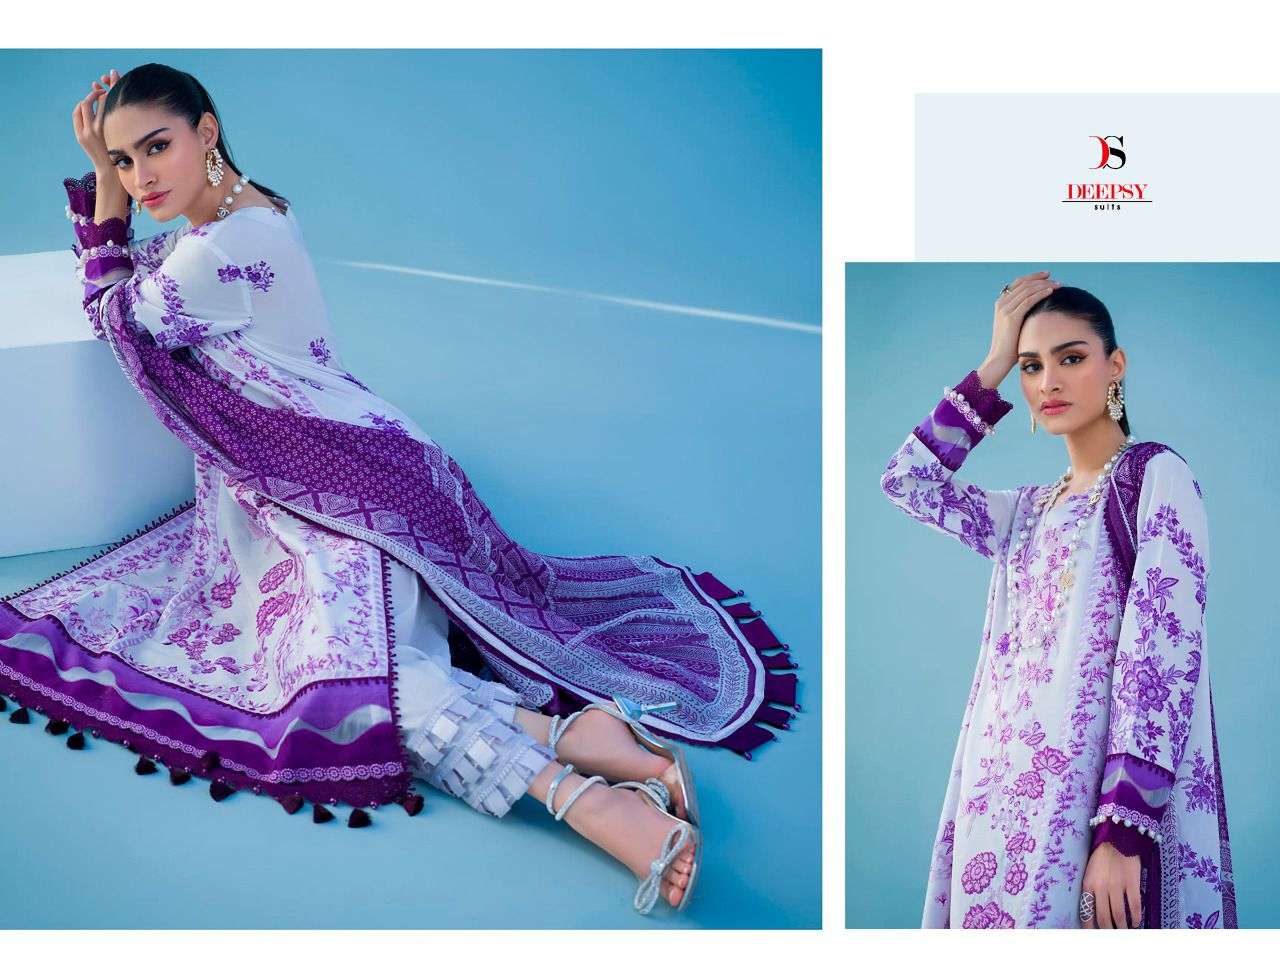 deepsy suit sana safinaz muslin 22-3 catalogue best price supplier india